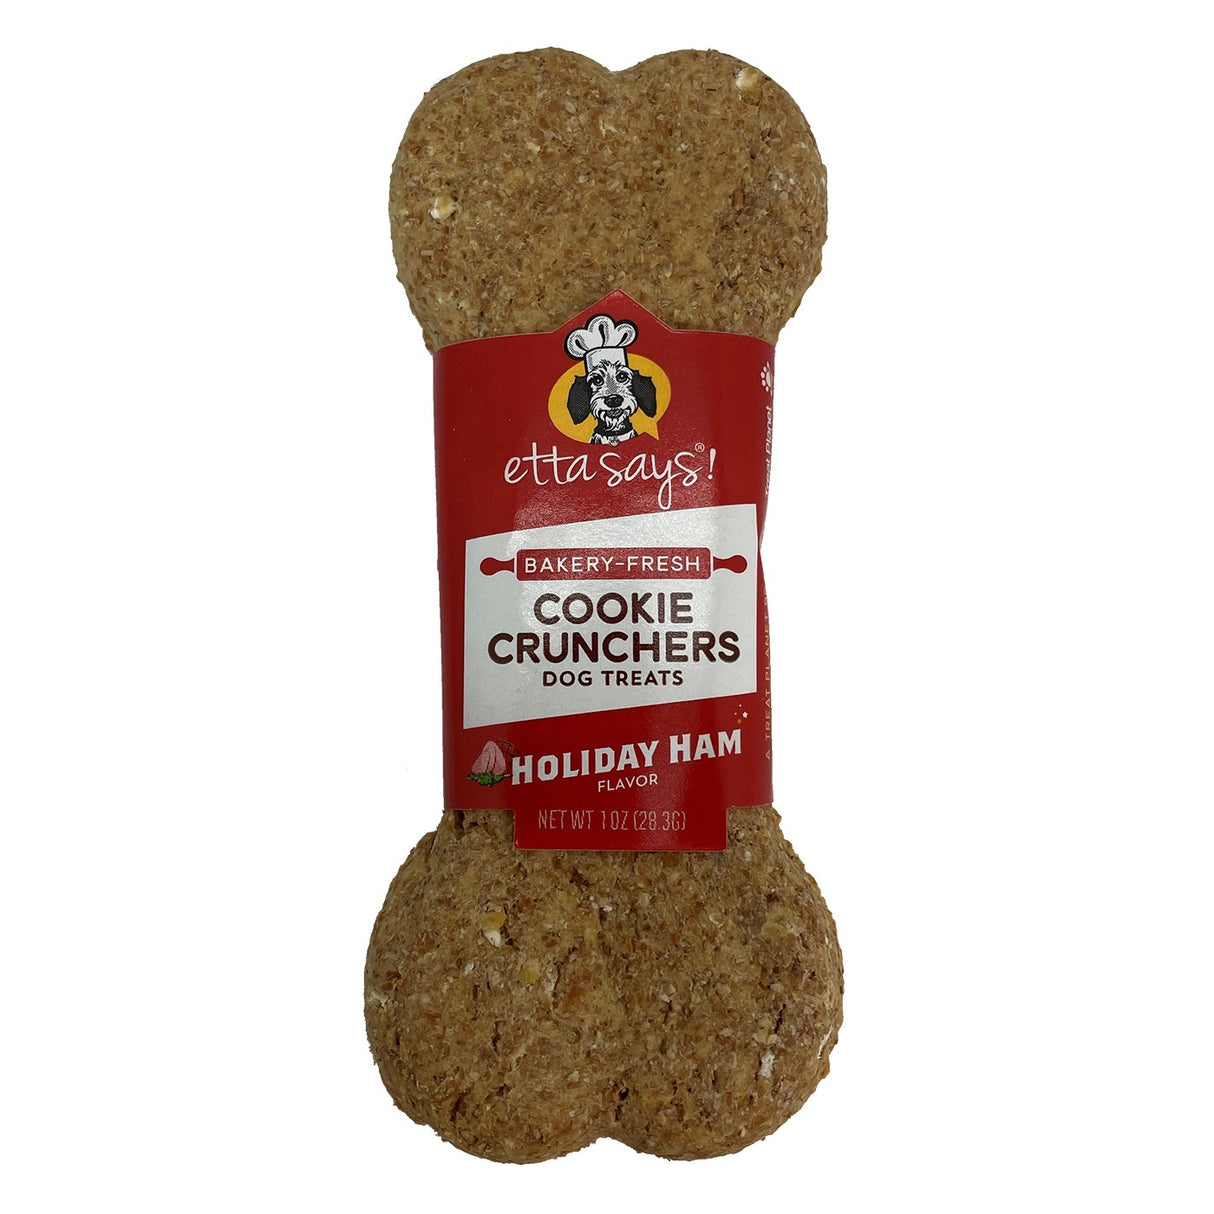 Etta dit ! Cookie Crunchers Holiday Ham Dog Treat 1 oz.